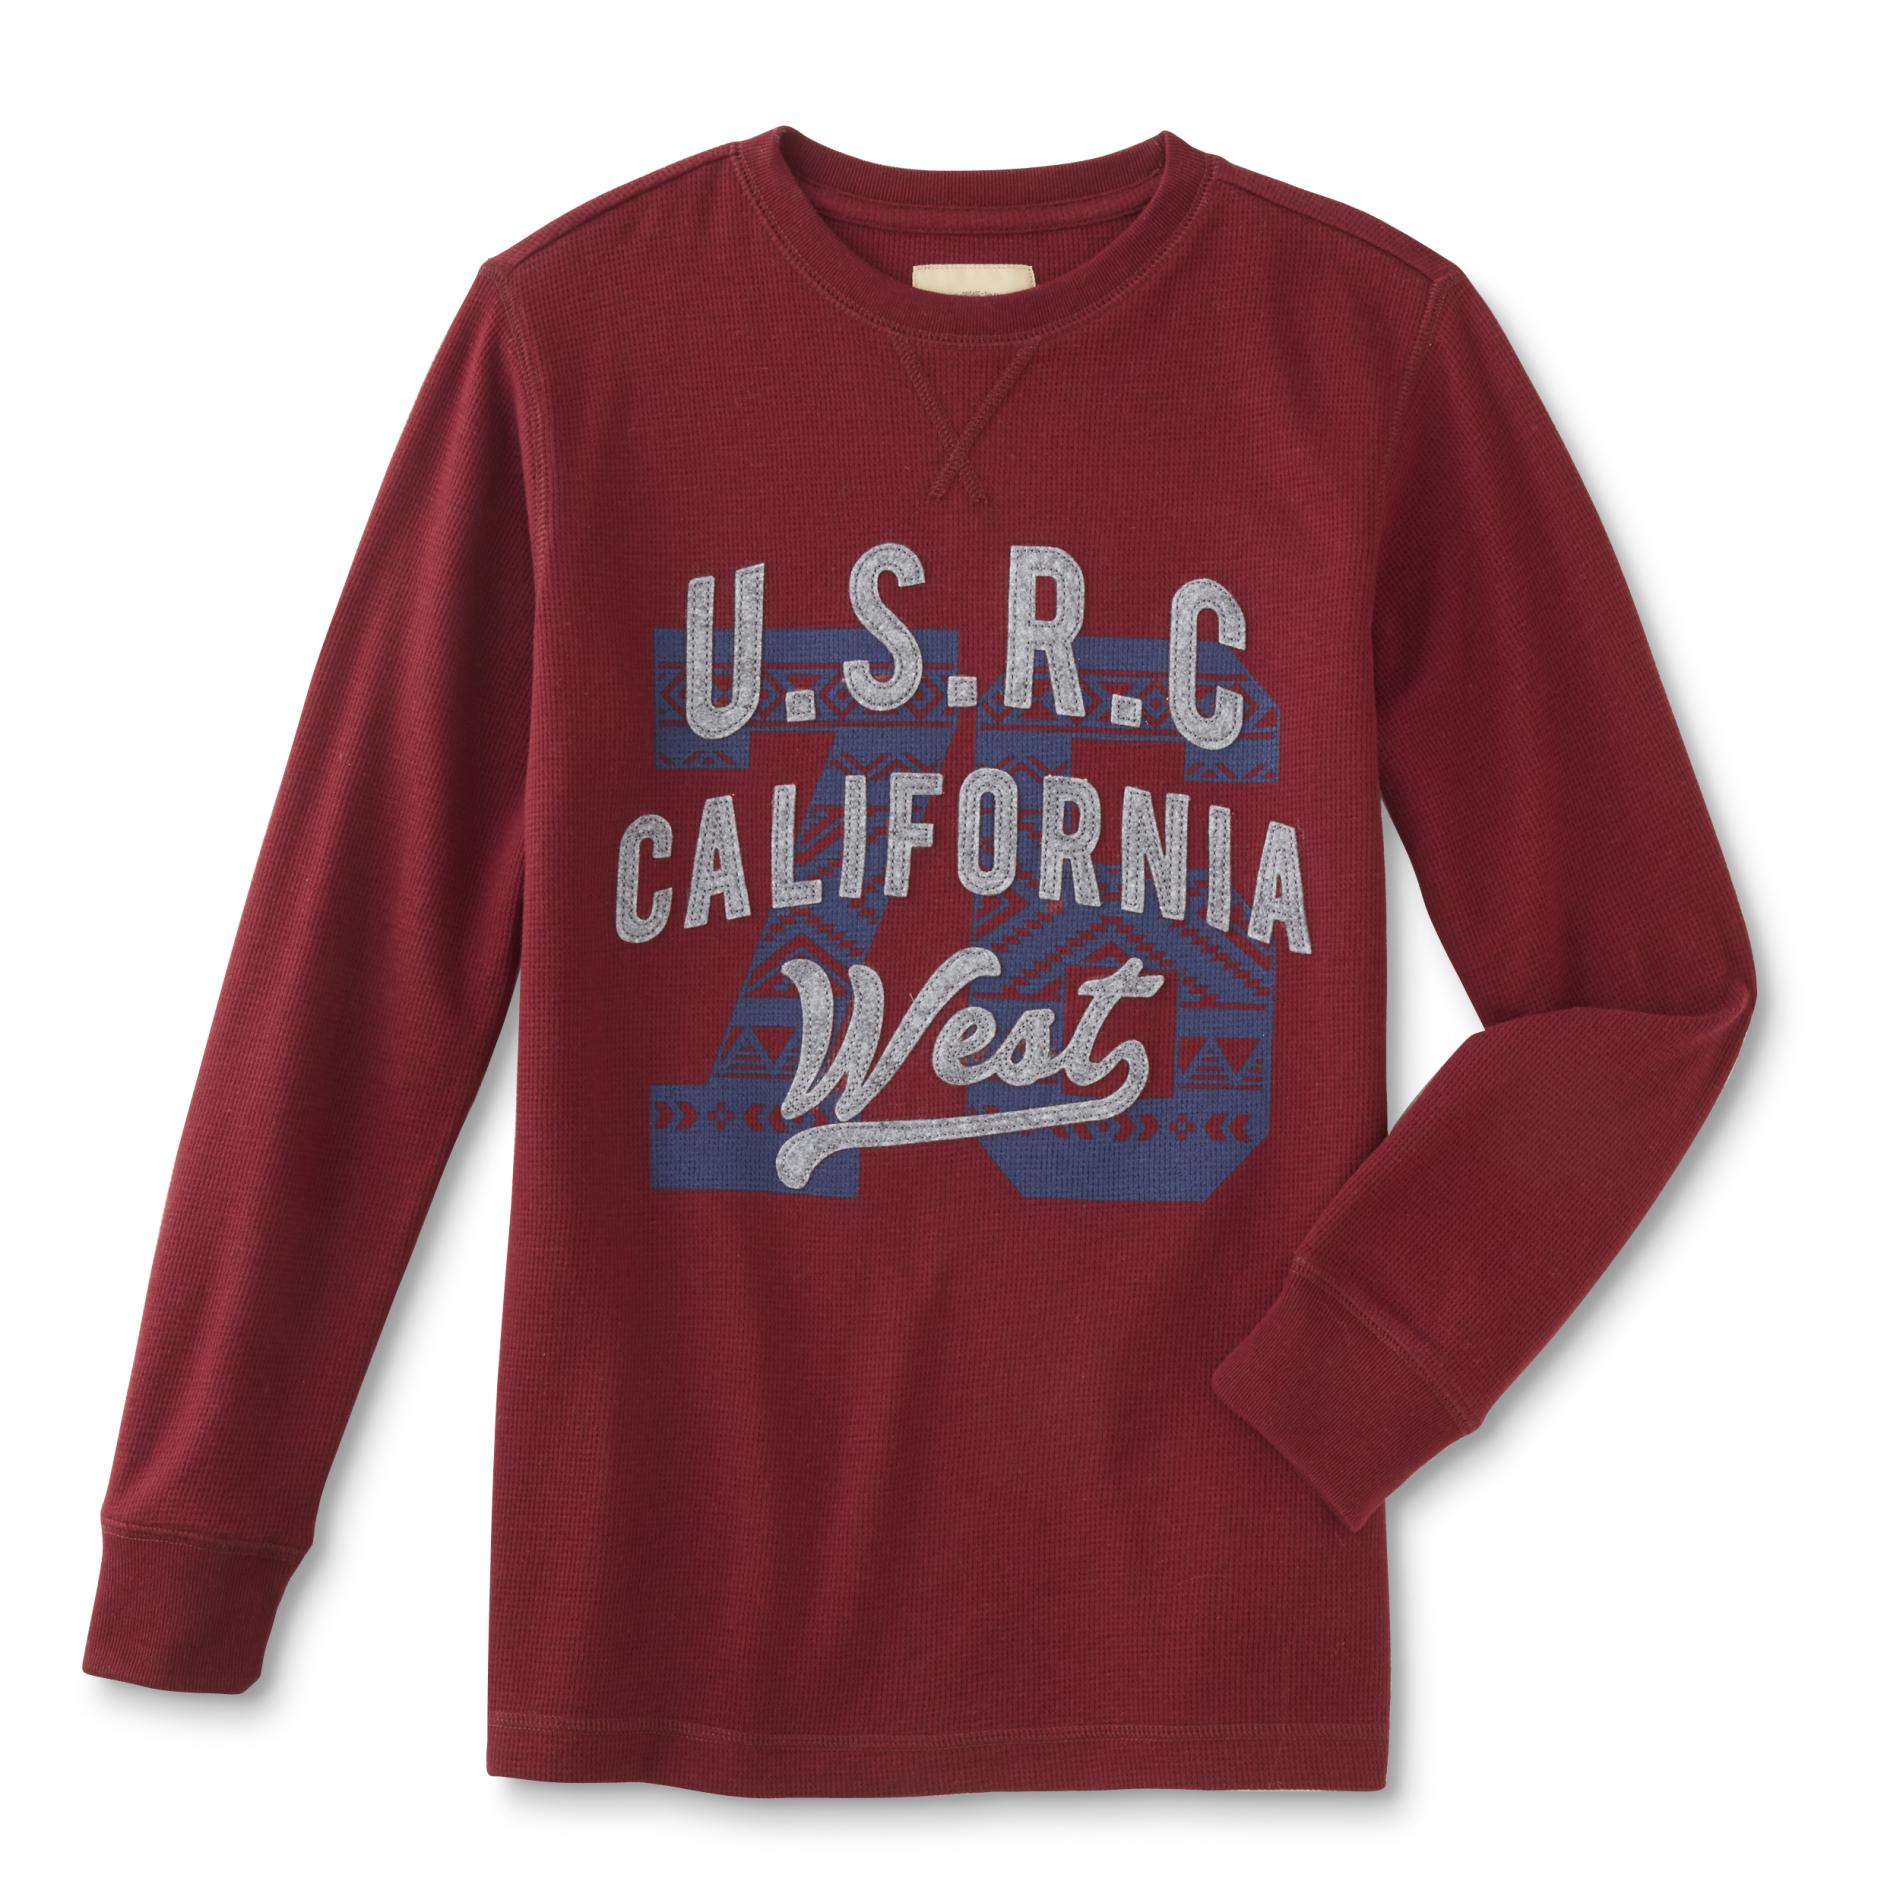 Roebuck & Co. Boy's Thermal T-Shirt - California West